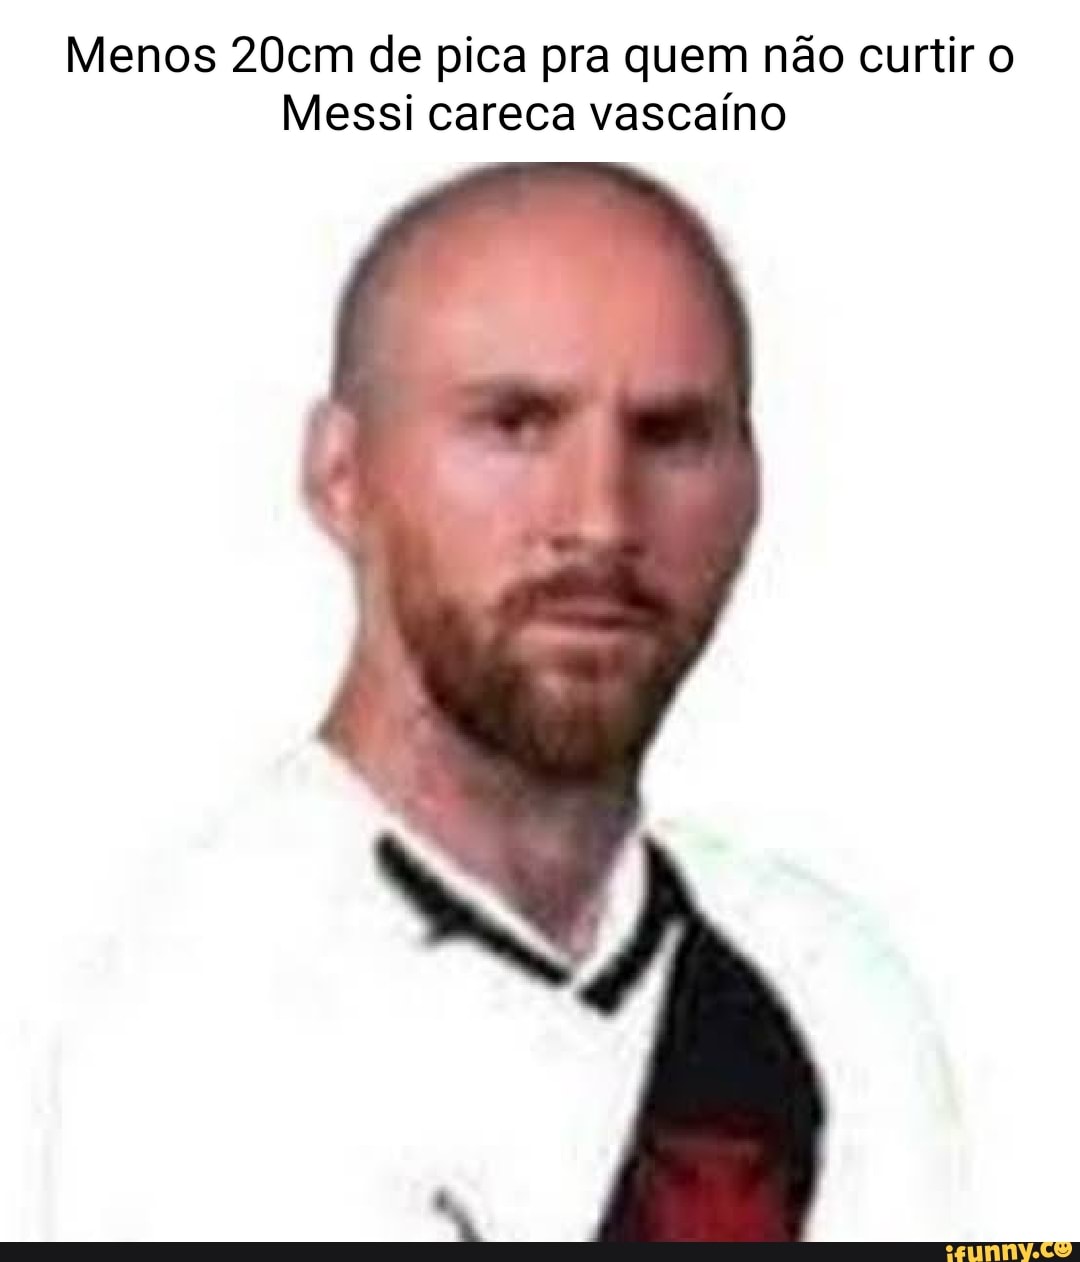 Messi vascaino careca : r/pescocofino